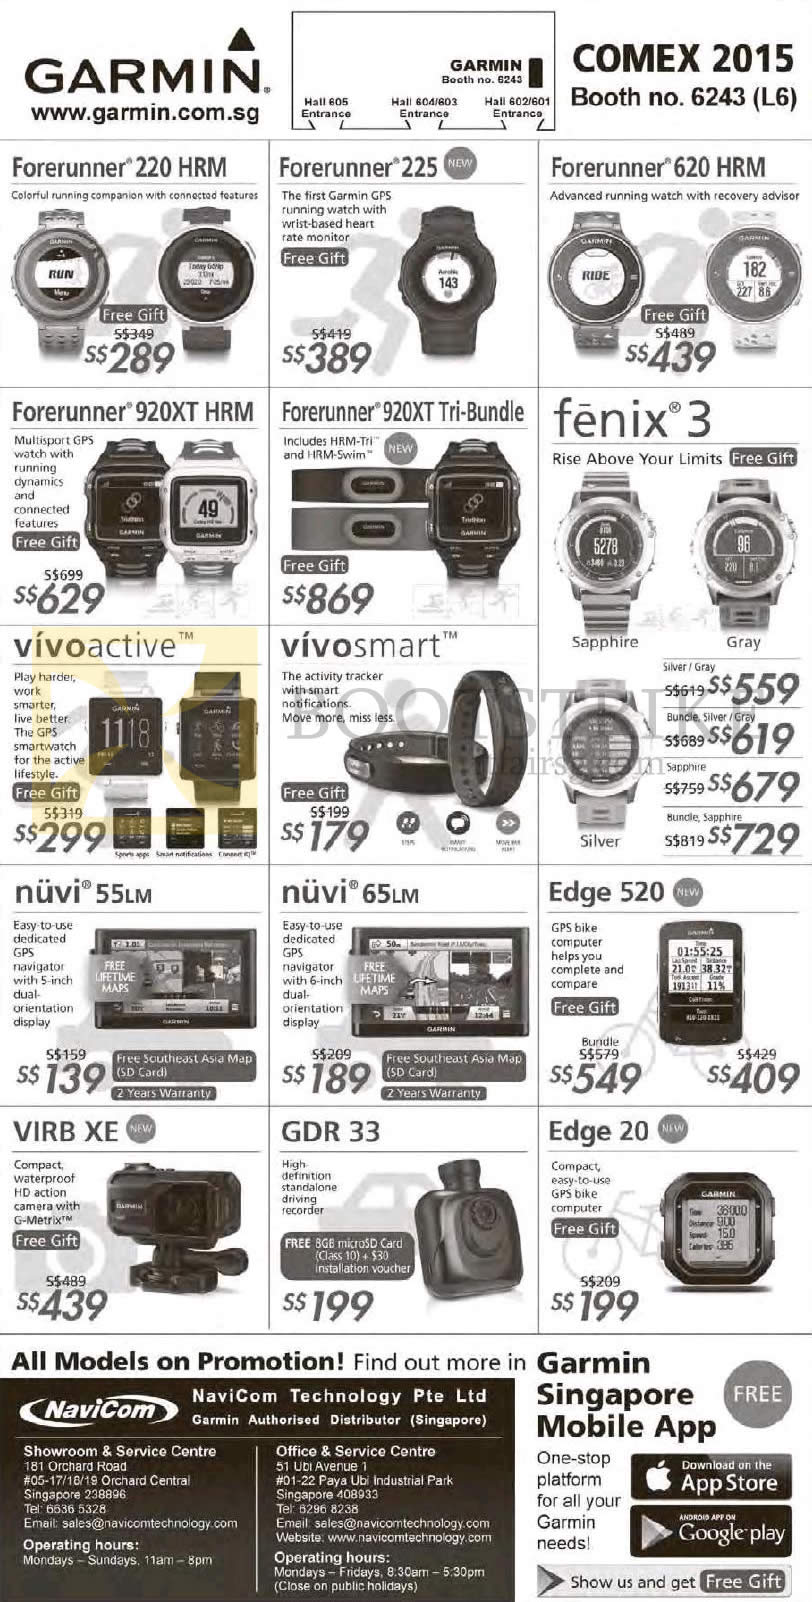 COMEX 2015 price list image brochure of Garmin GPS Navigators, Fitness Watches, Car Cameras, Forerunner 220 HRM, 225, 620 HRM, 920XT, 920XT, Fenix 3, Vivoactive, Vivosmart, Nuvi 55LM 65LM, Edge 520 20, Vibr XE, GDR 33